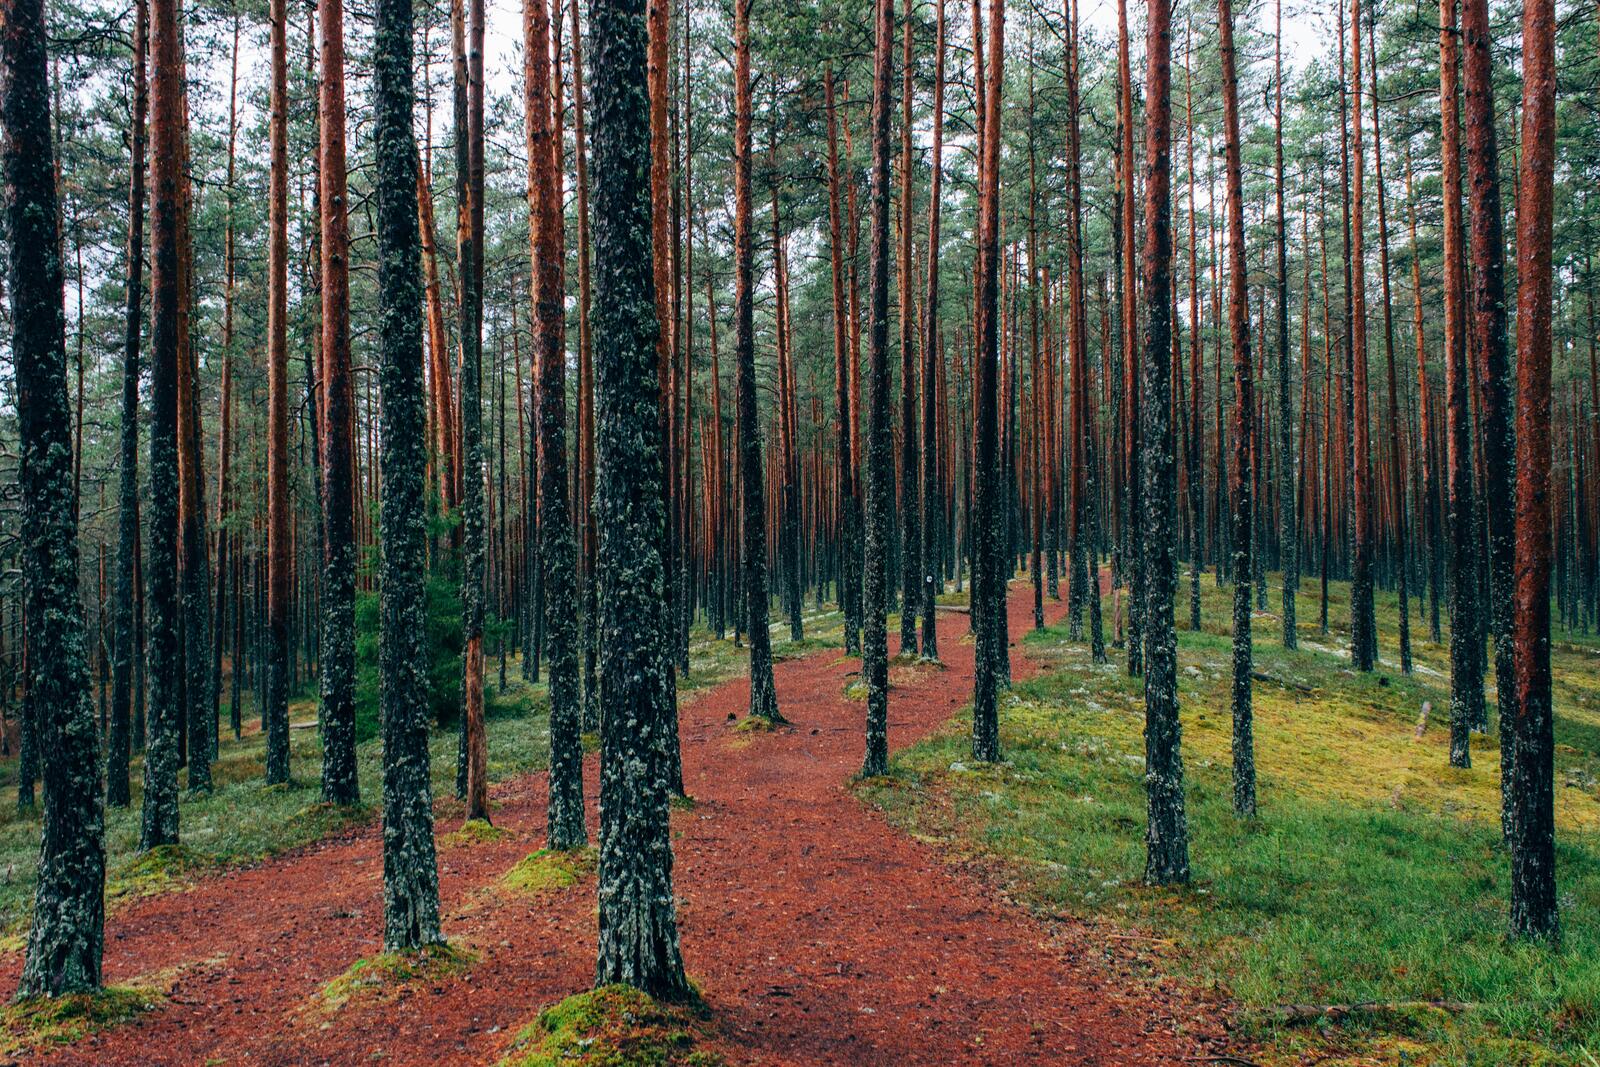 Особенности хвойного леса